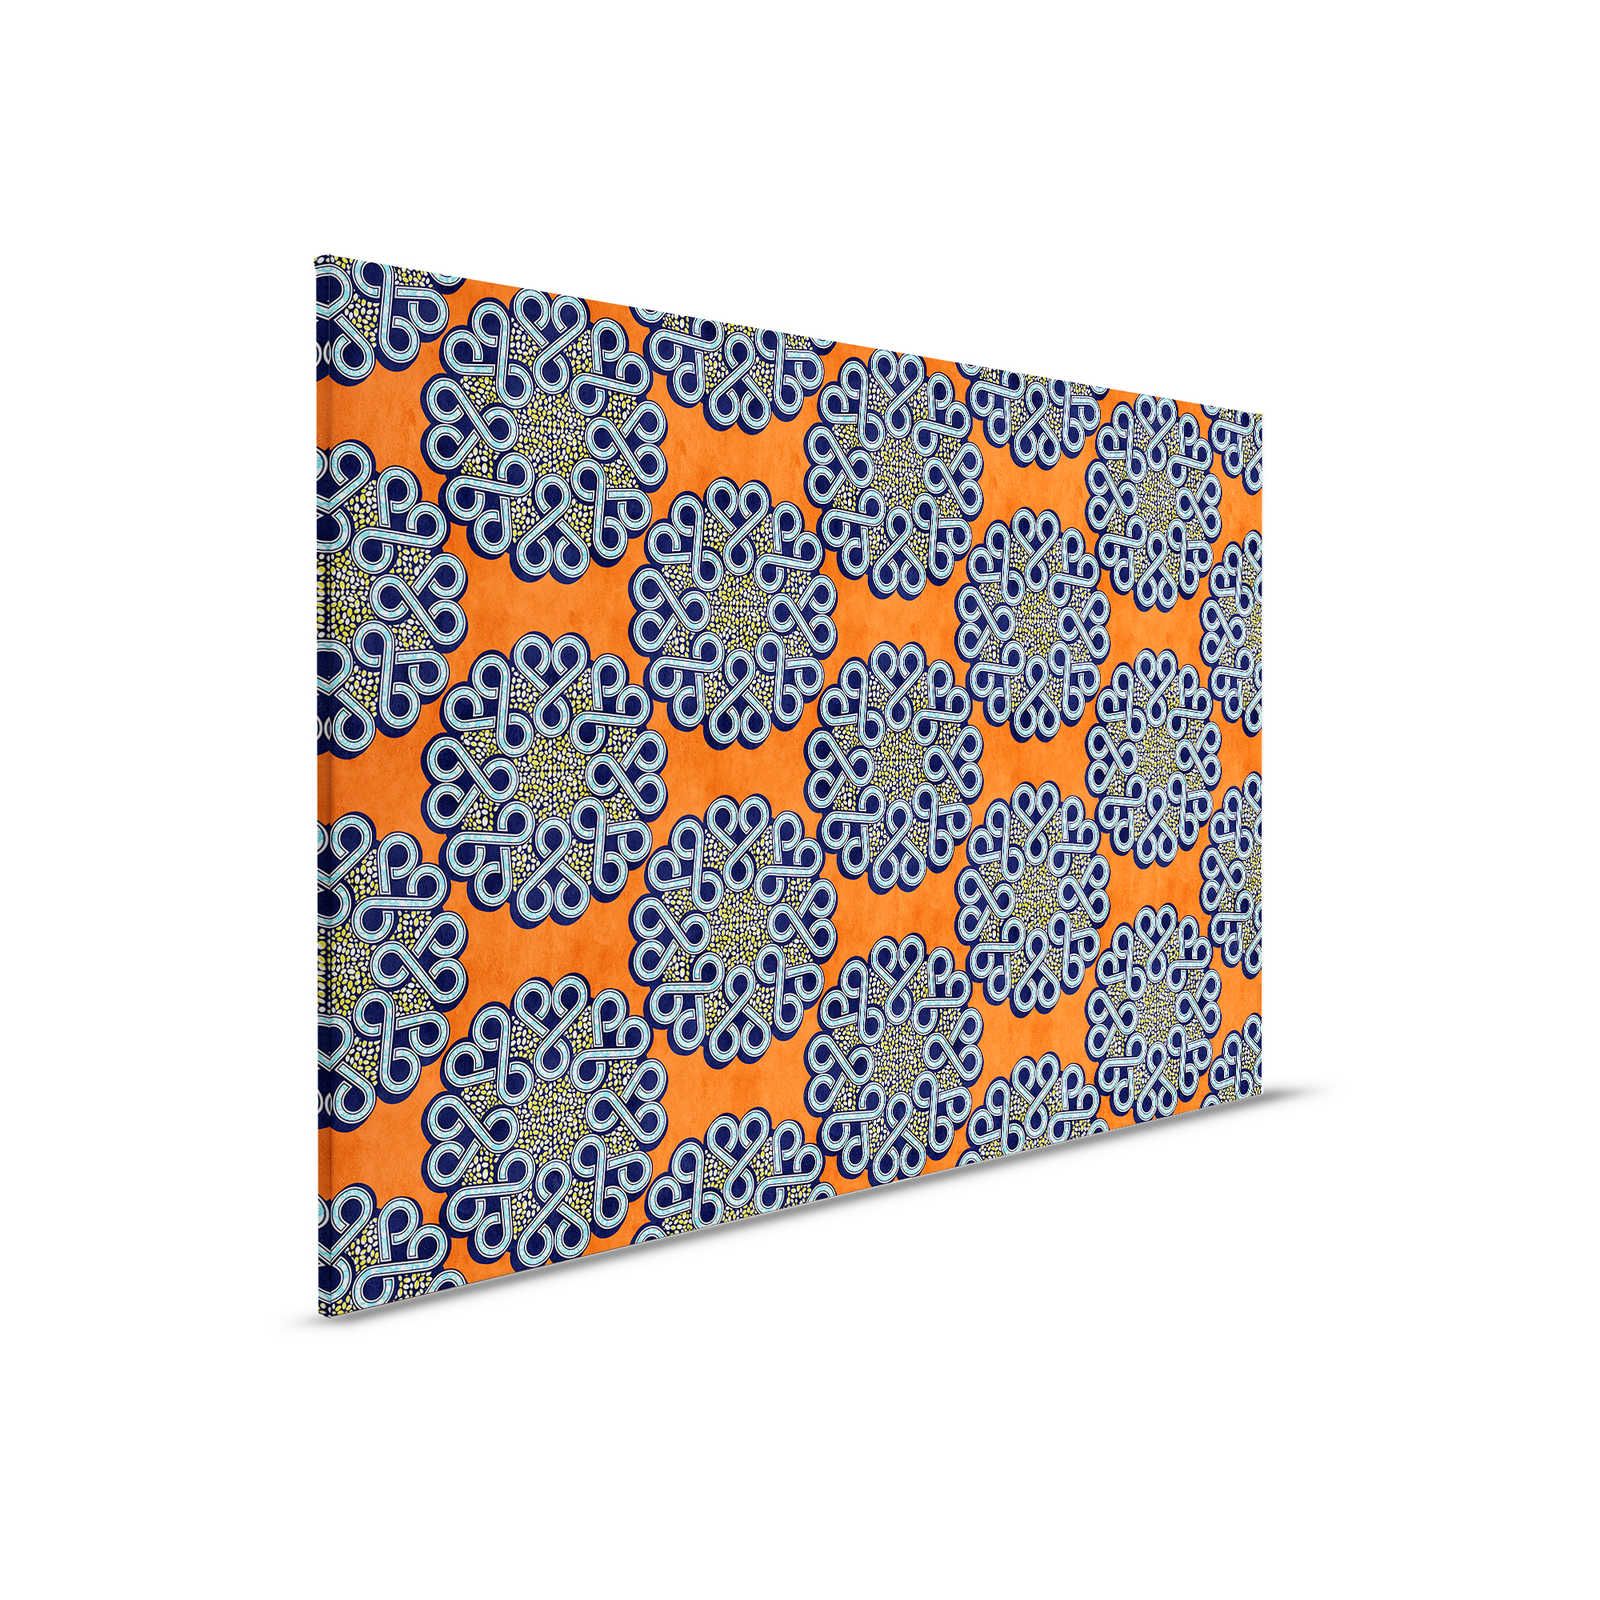 Dakar 2 - Aftican Canvas Wax Textile Pattern Orange, Blue - 0.90 m x 0.60 m
